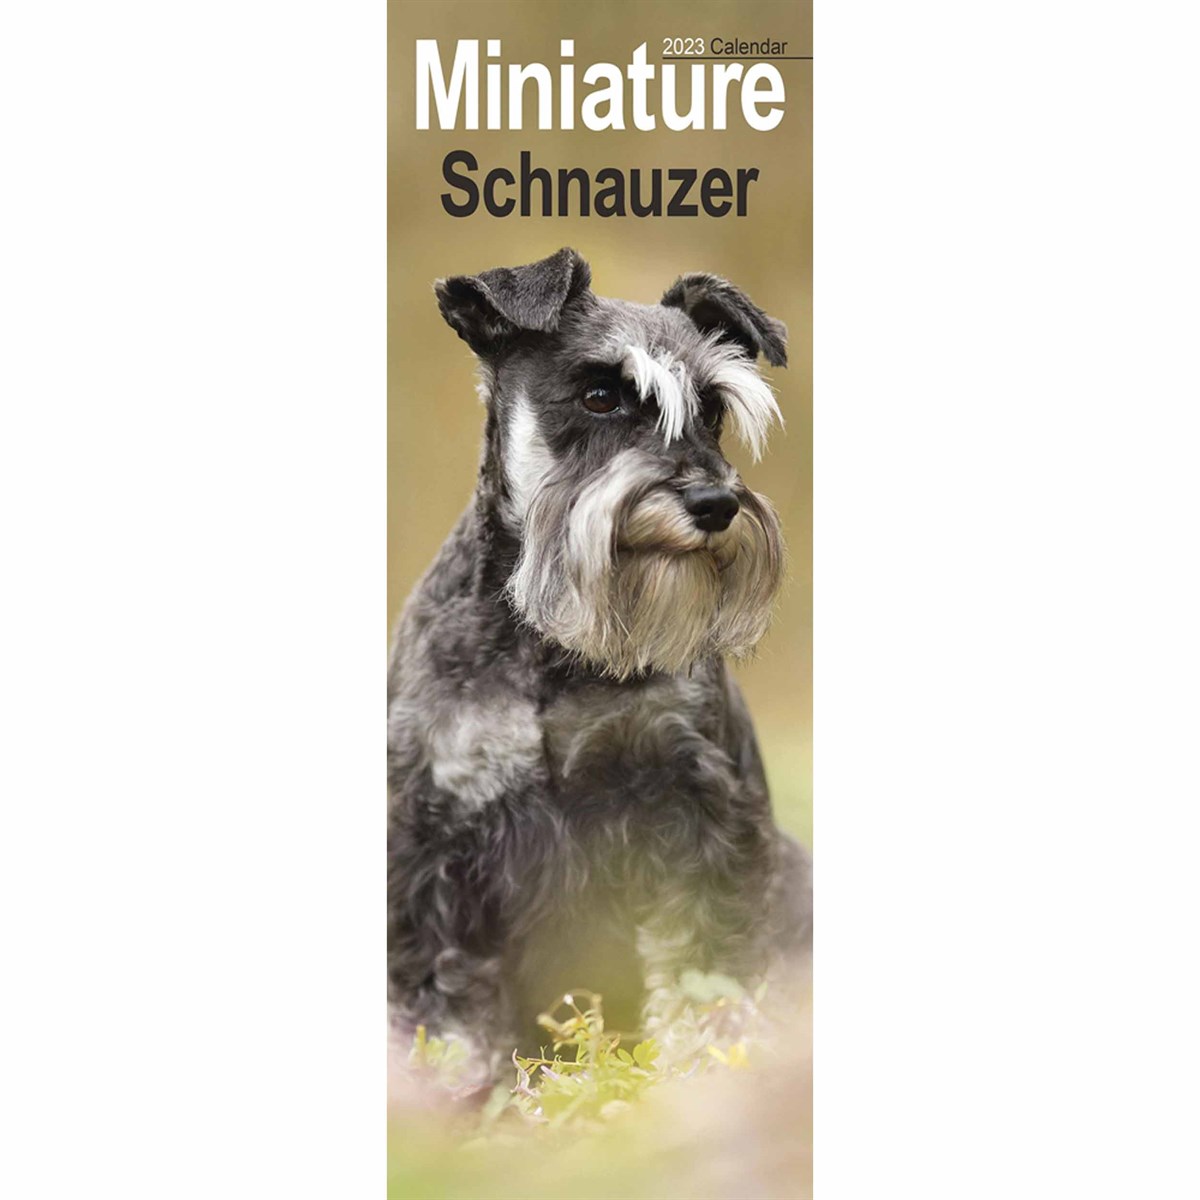 Miniature Schnauzer Slim 2023 Calendars